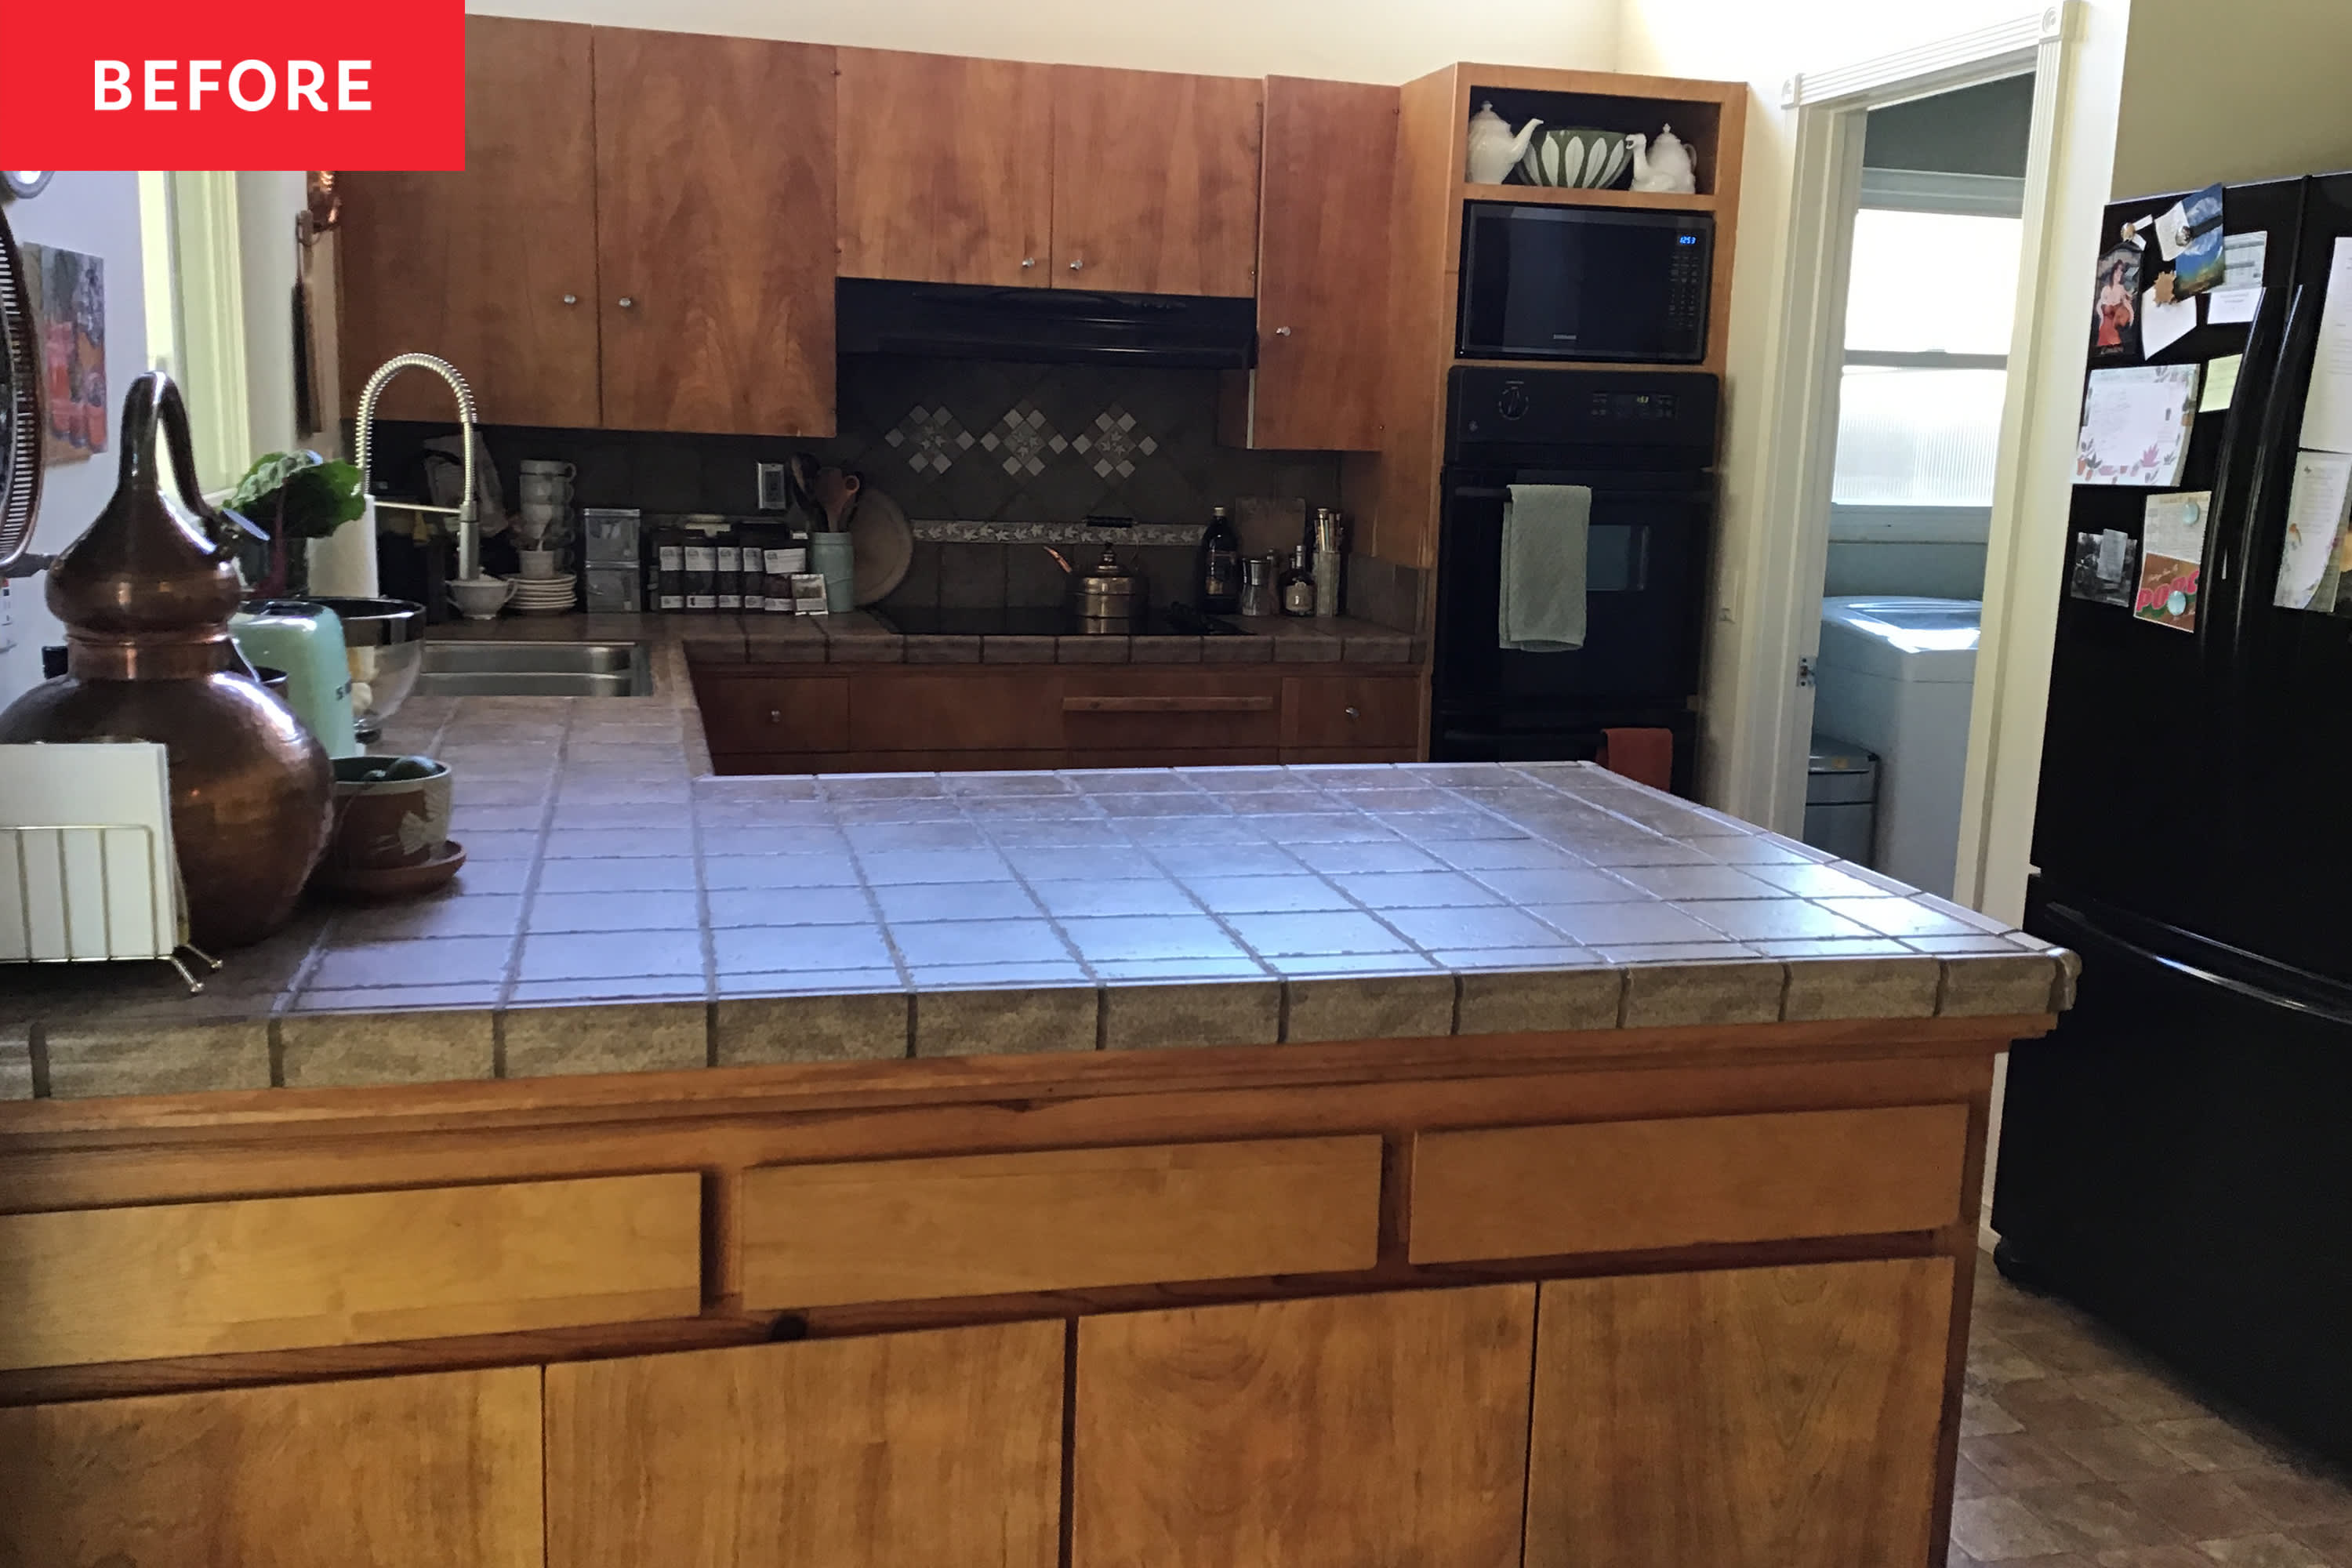 https://cdn.apartmenttherapy.info/image/upload/v1700168942/at/style/2023-12/designer-mid-century-modern-kitchen-renovation/blythe-interiors-kitchen-before-2.jpg